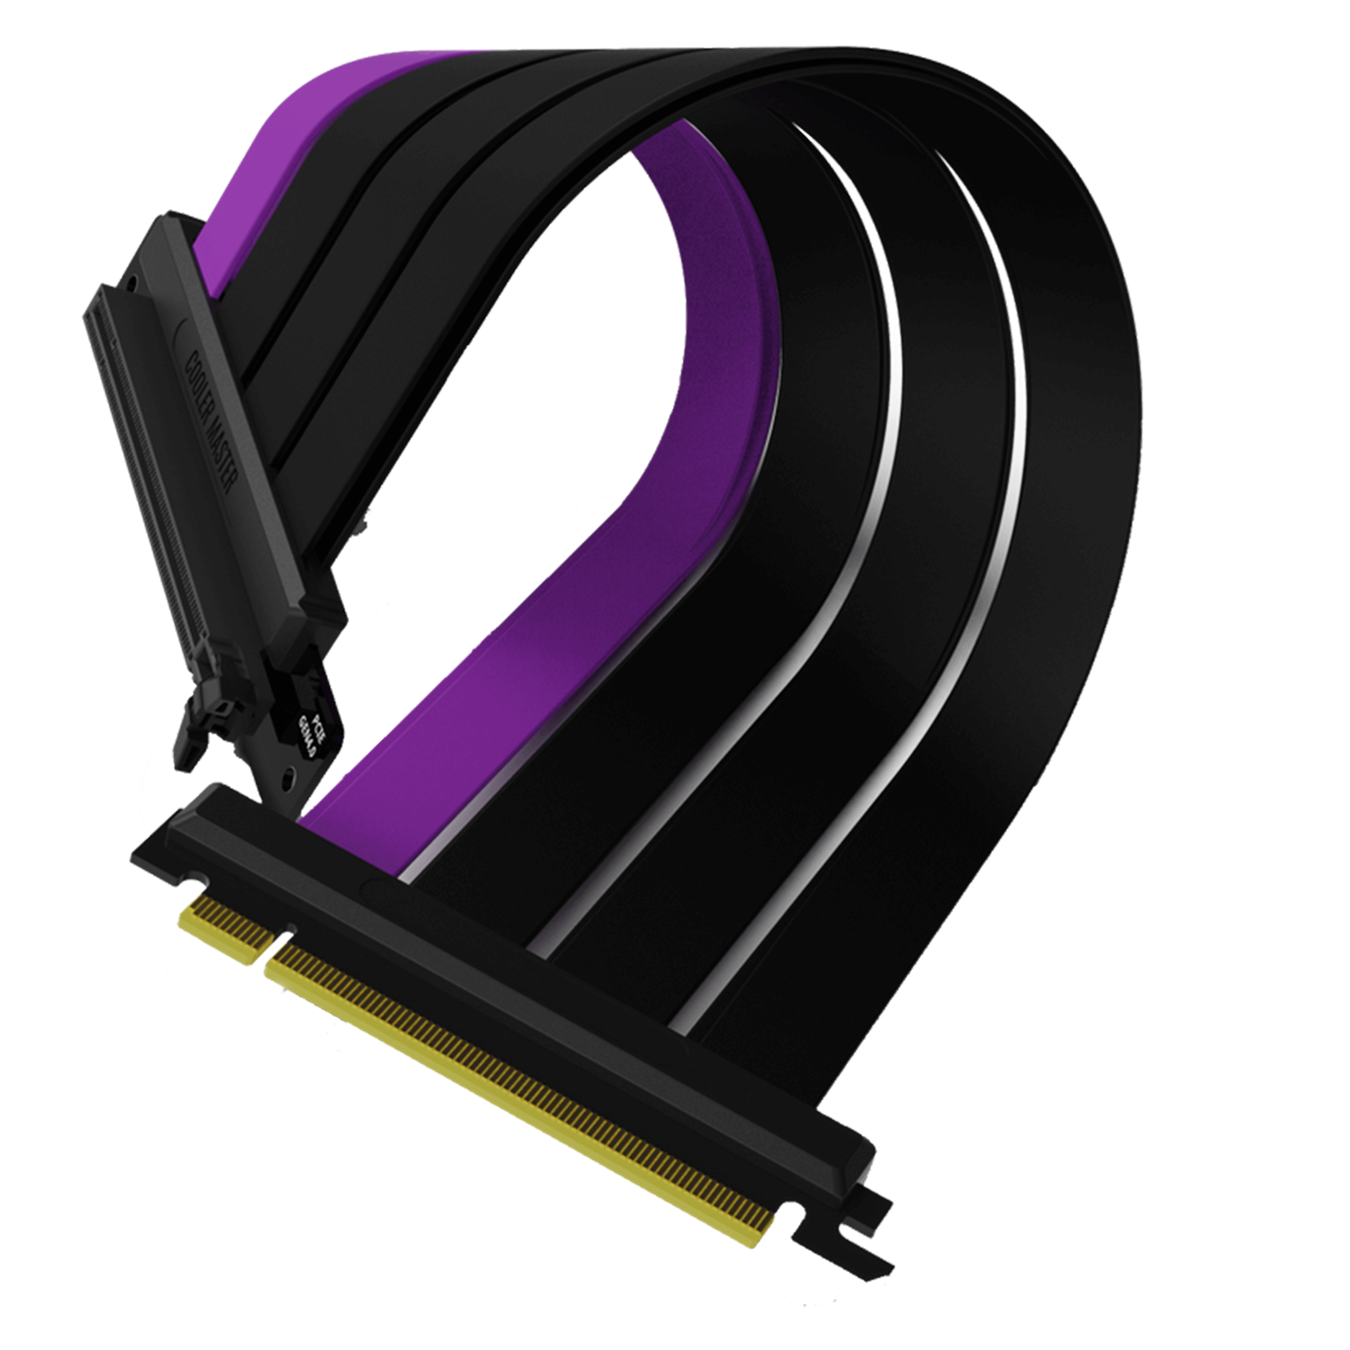 Cooler Master Riser Cable - PCIe 4.0 x16 - 200mm - Black/Purple